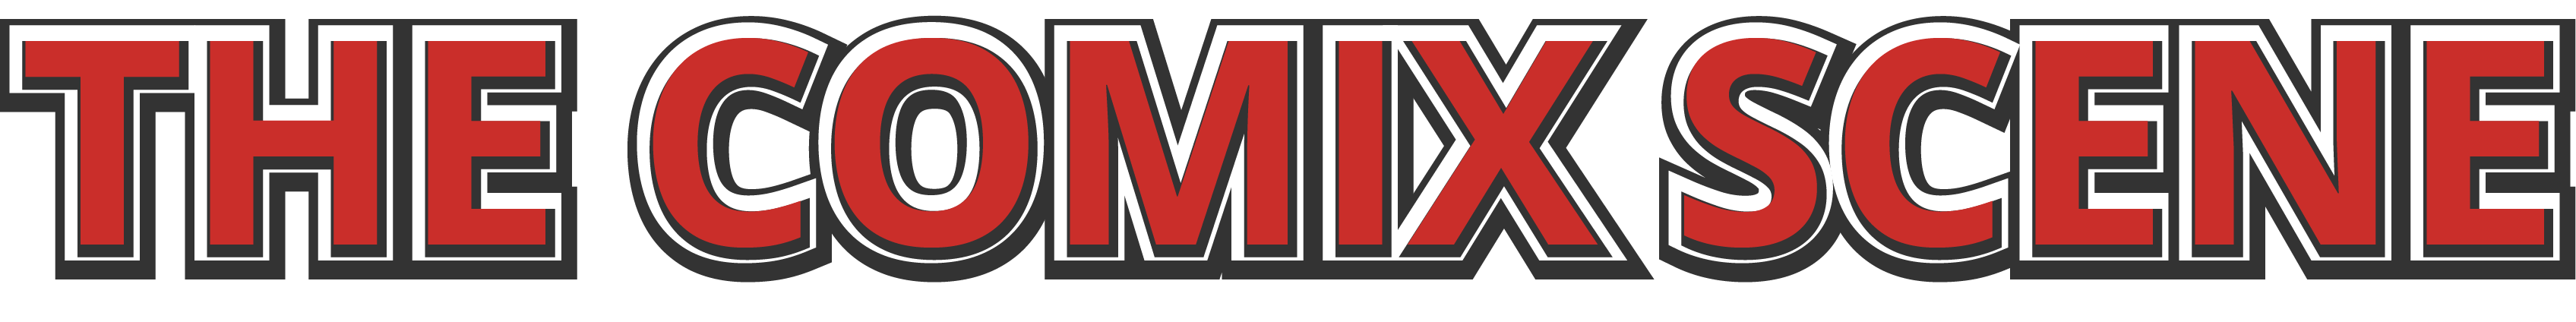 The Comix Scene Logo